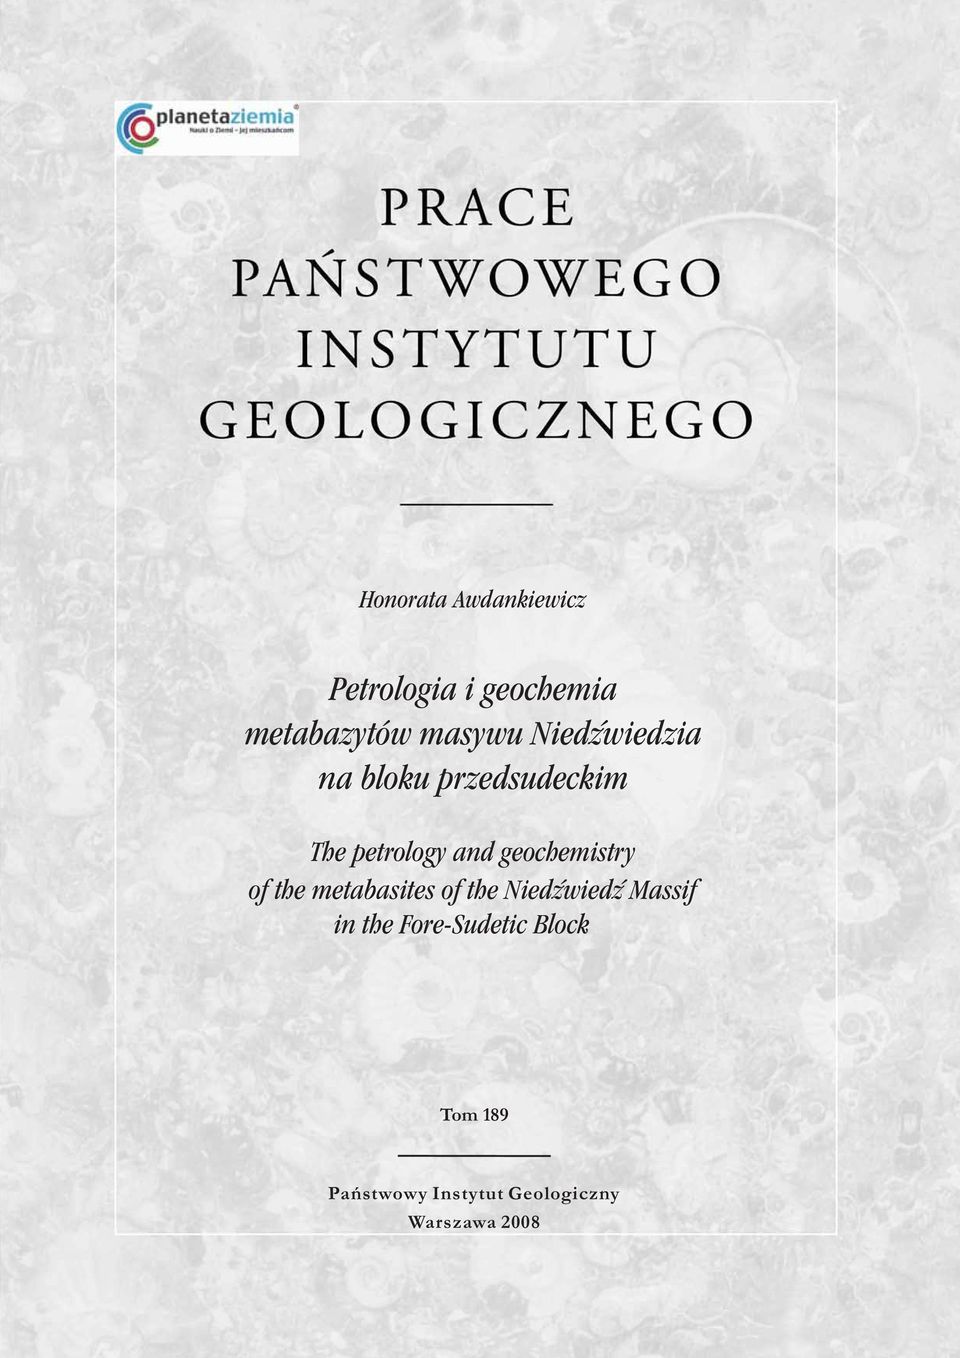 geochemistry of the metabasites of the Niedzwiedz Massif in the